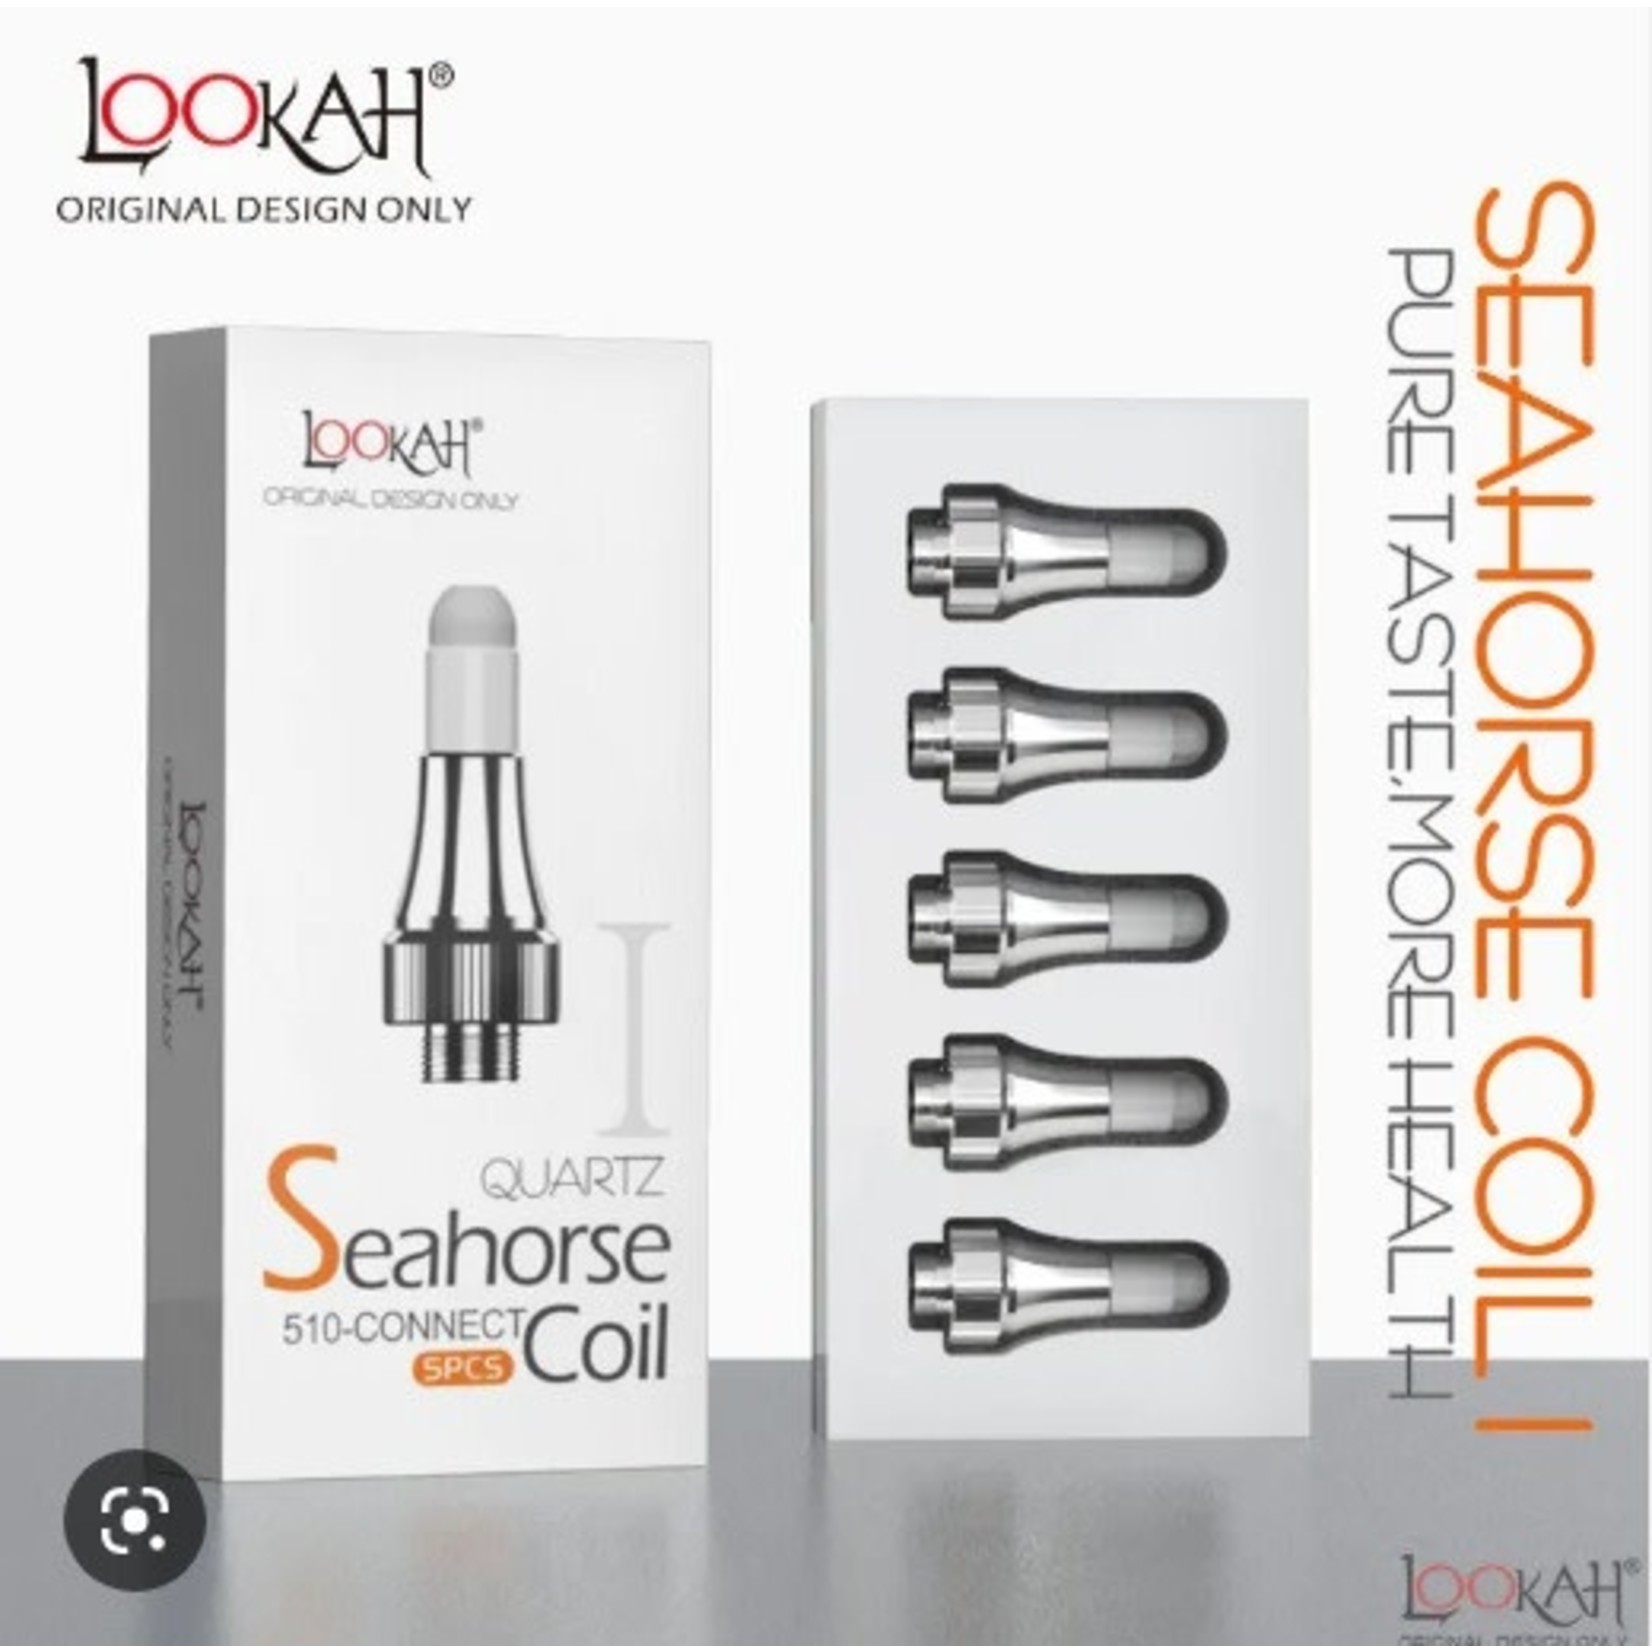 Lookah Lookah Seahorse Replacement Coils - Pack of 5